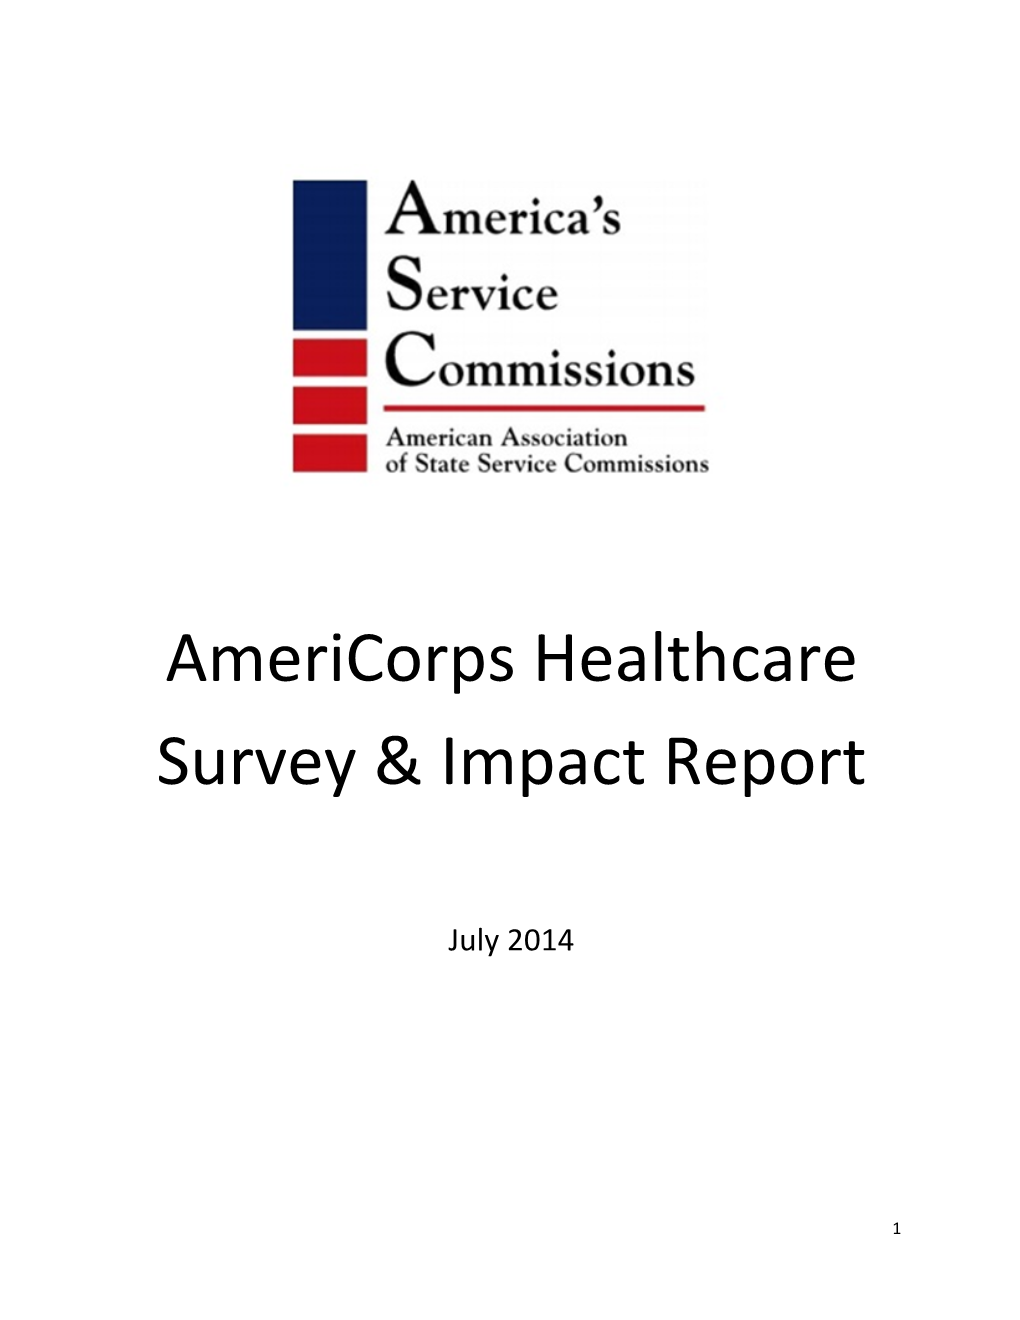 Americorps Healthcare Survey & Impact Report